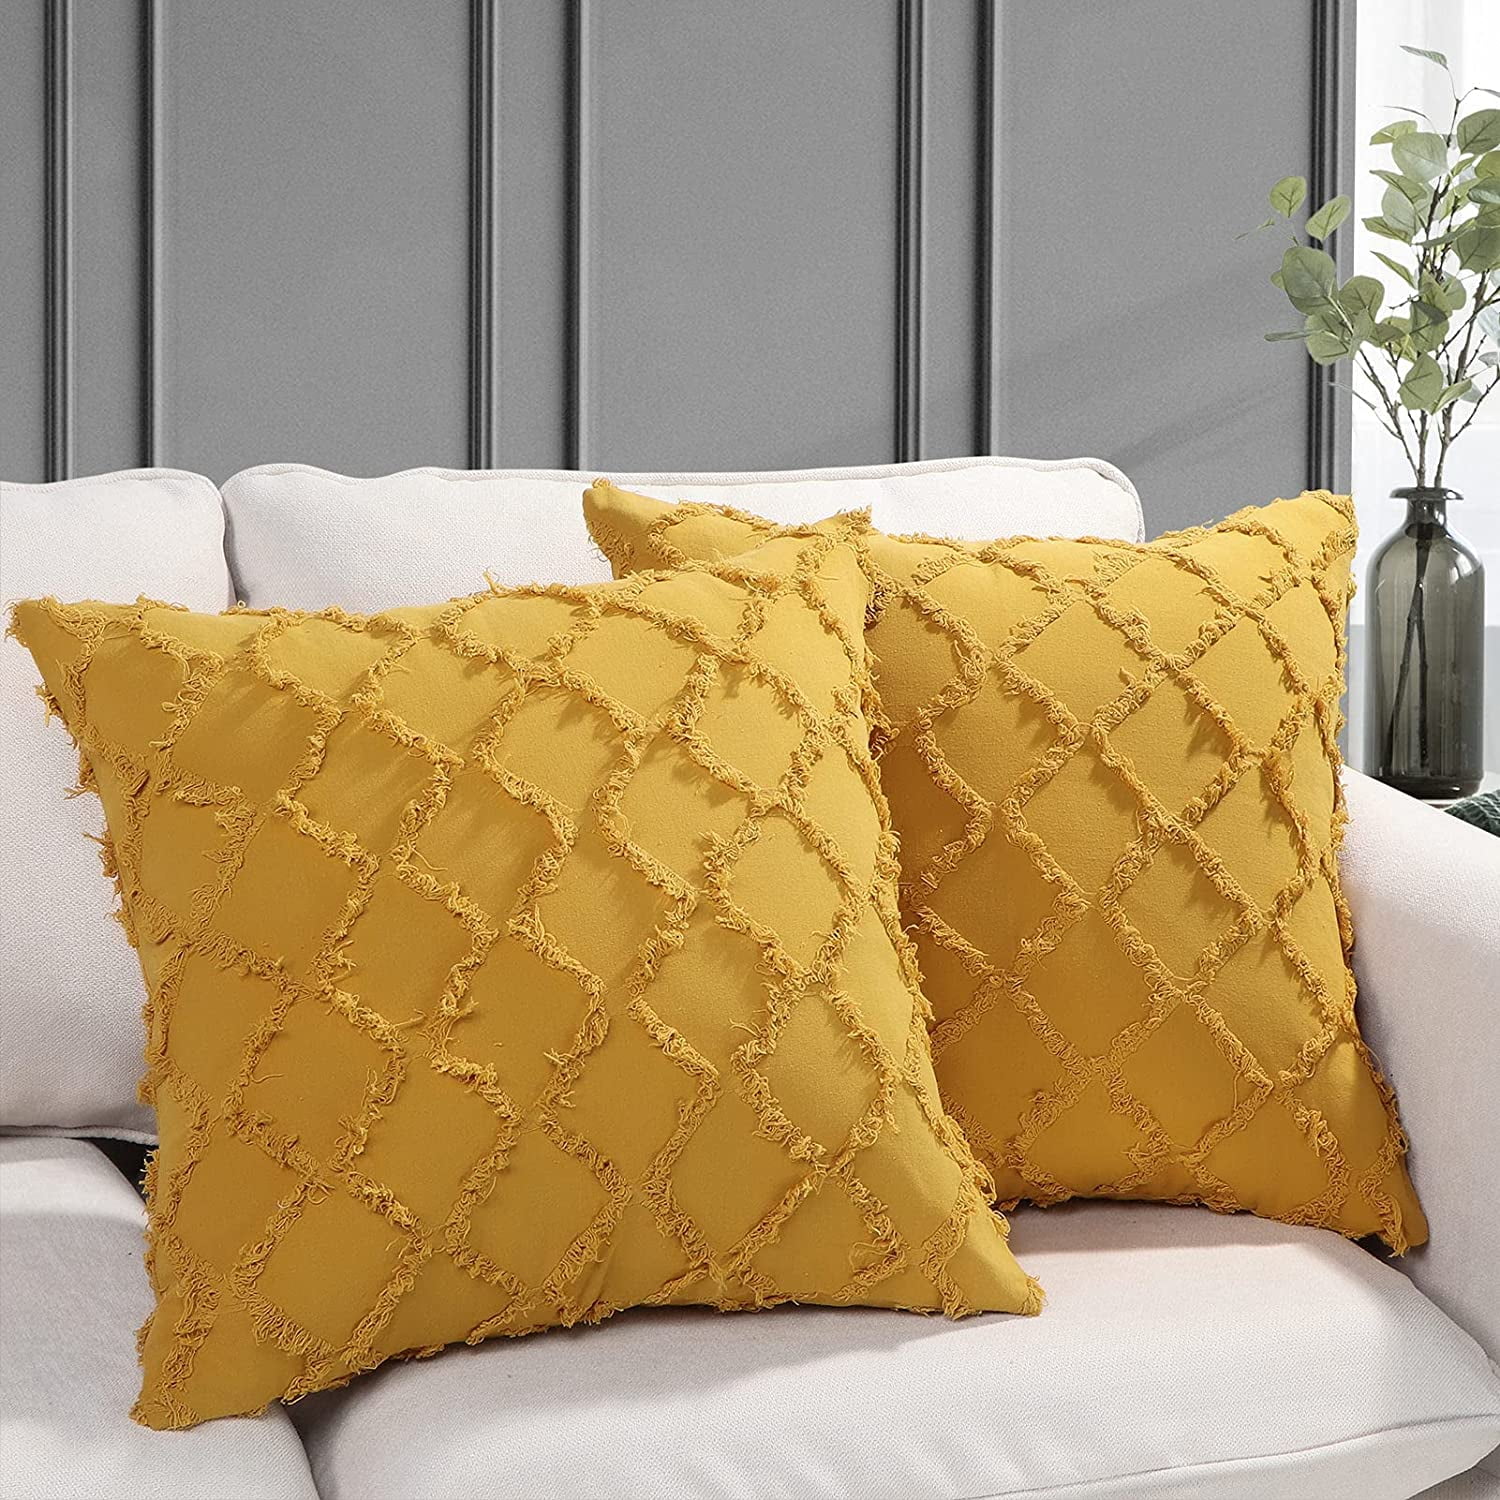 Black＋White Waves Cotton Linen Throw Pillow Case Cushion Cover Home Decor 